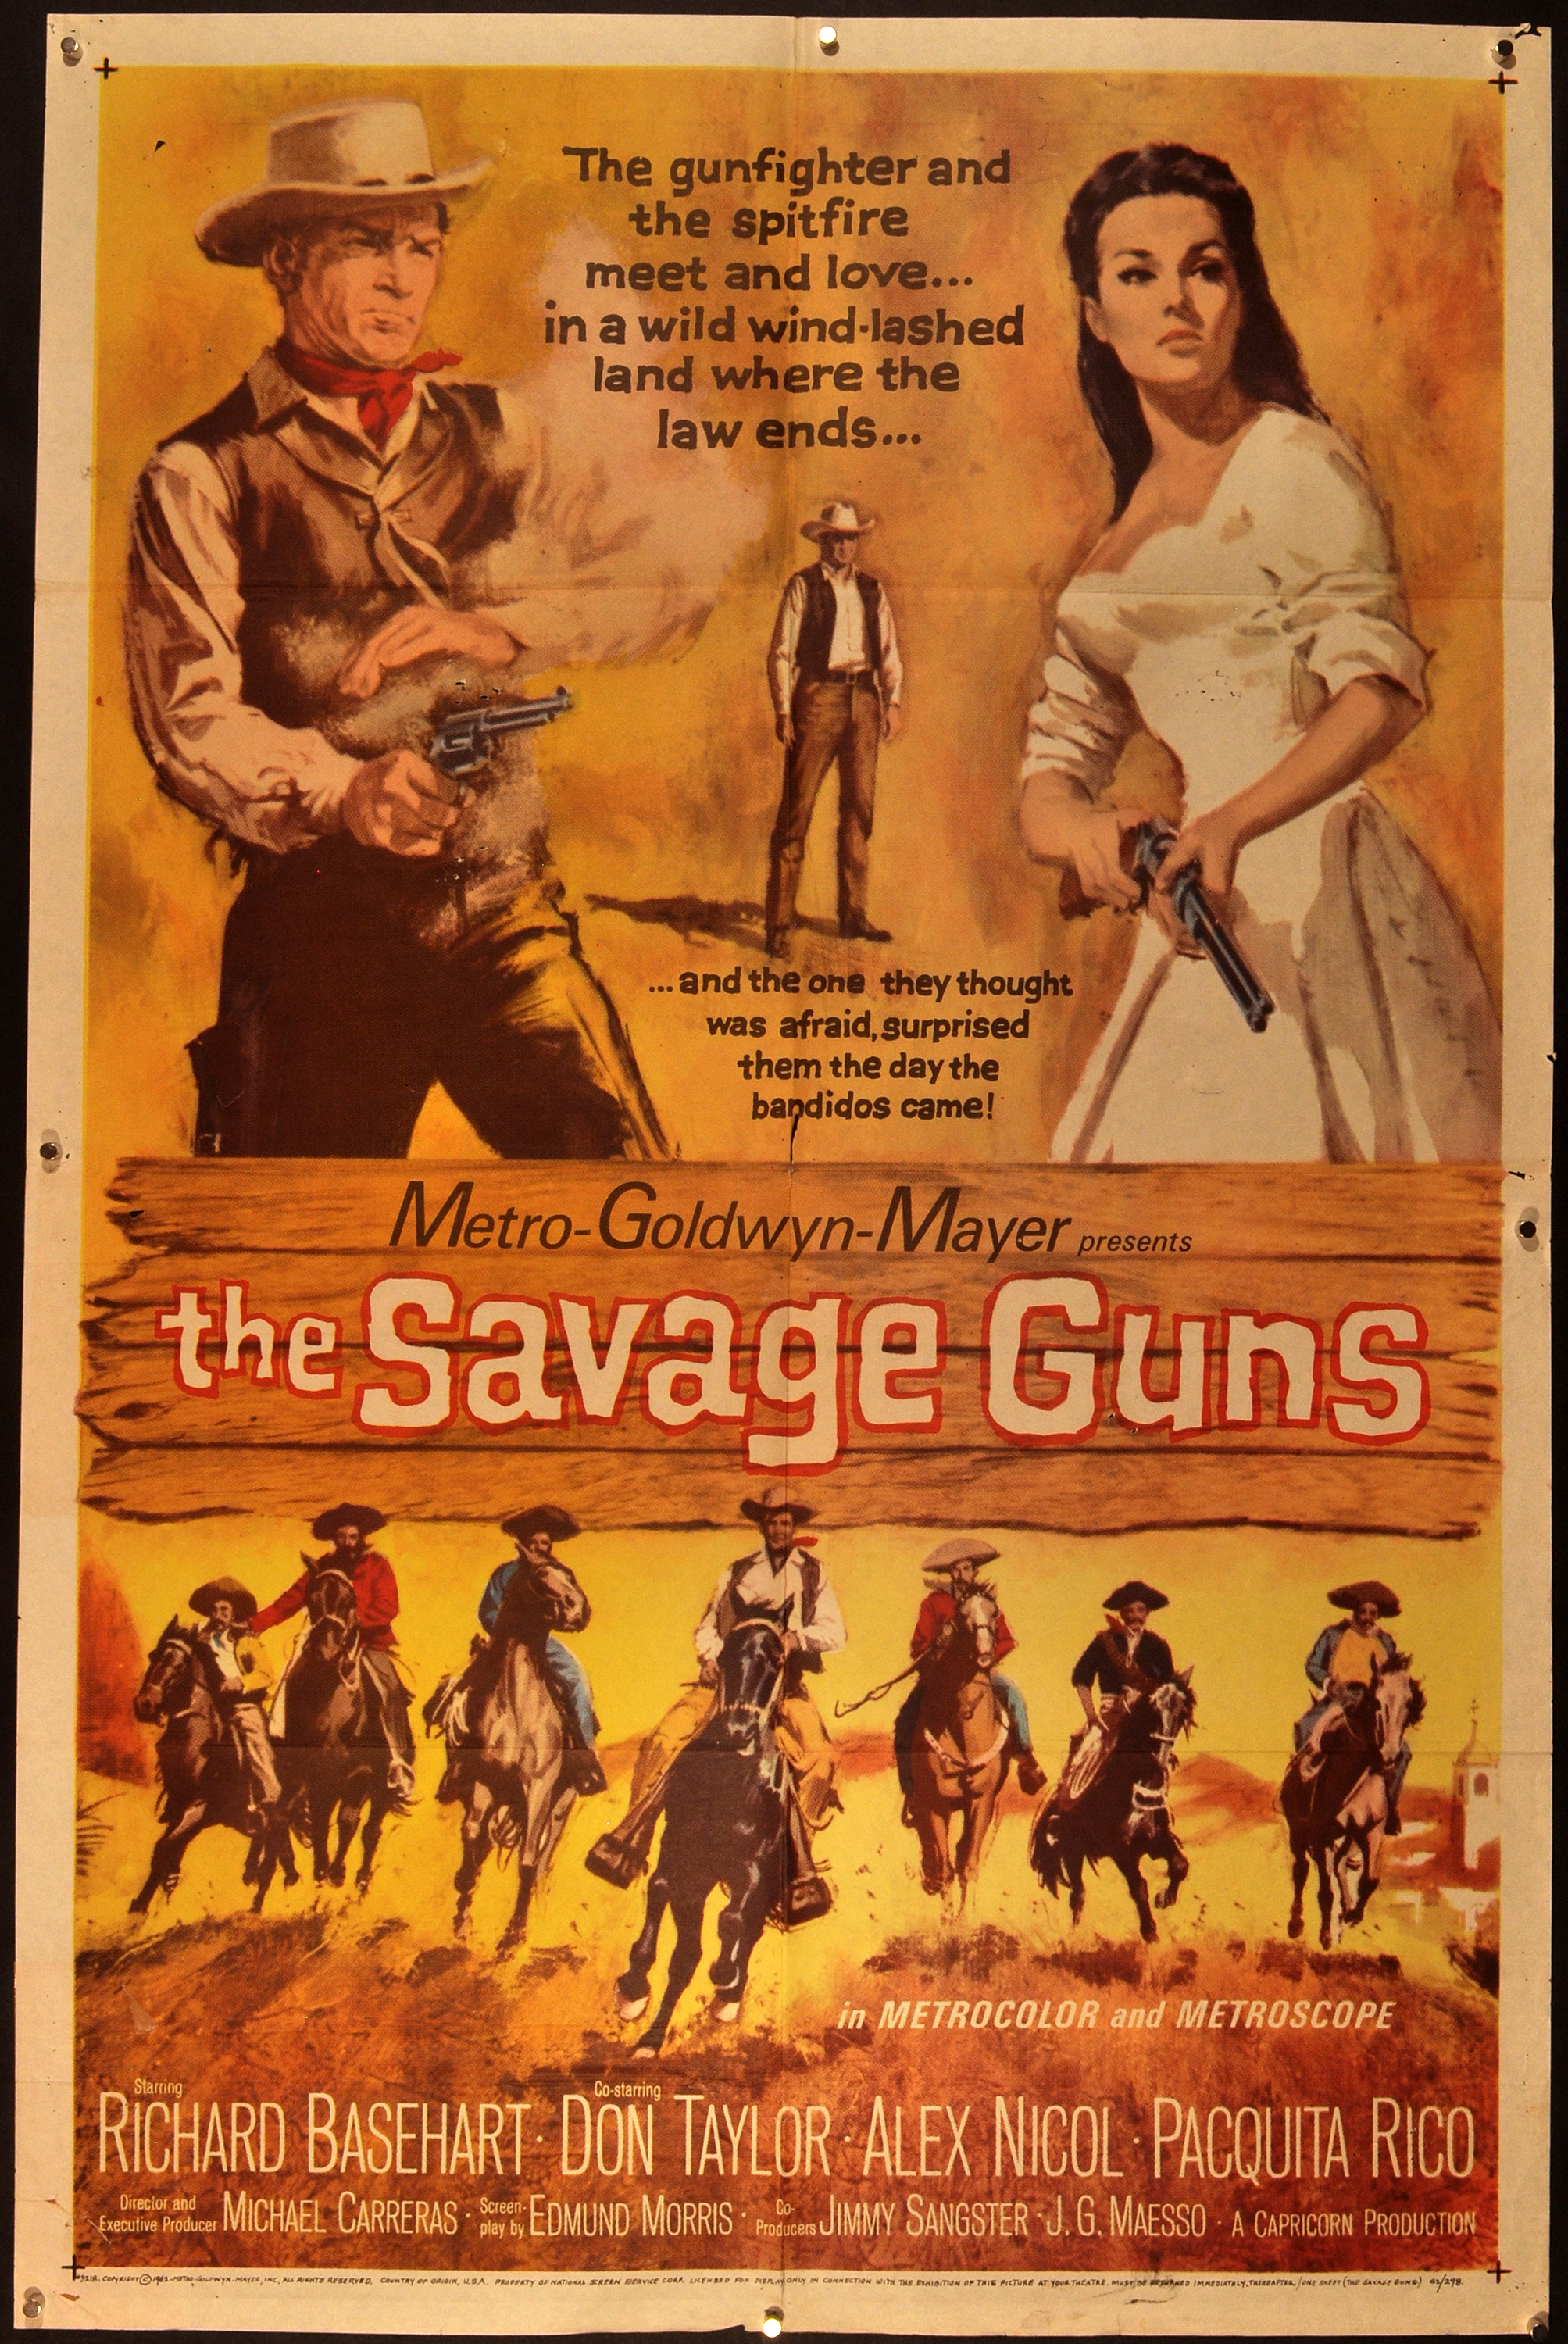 The Savage Guns